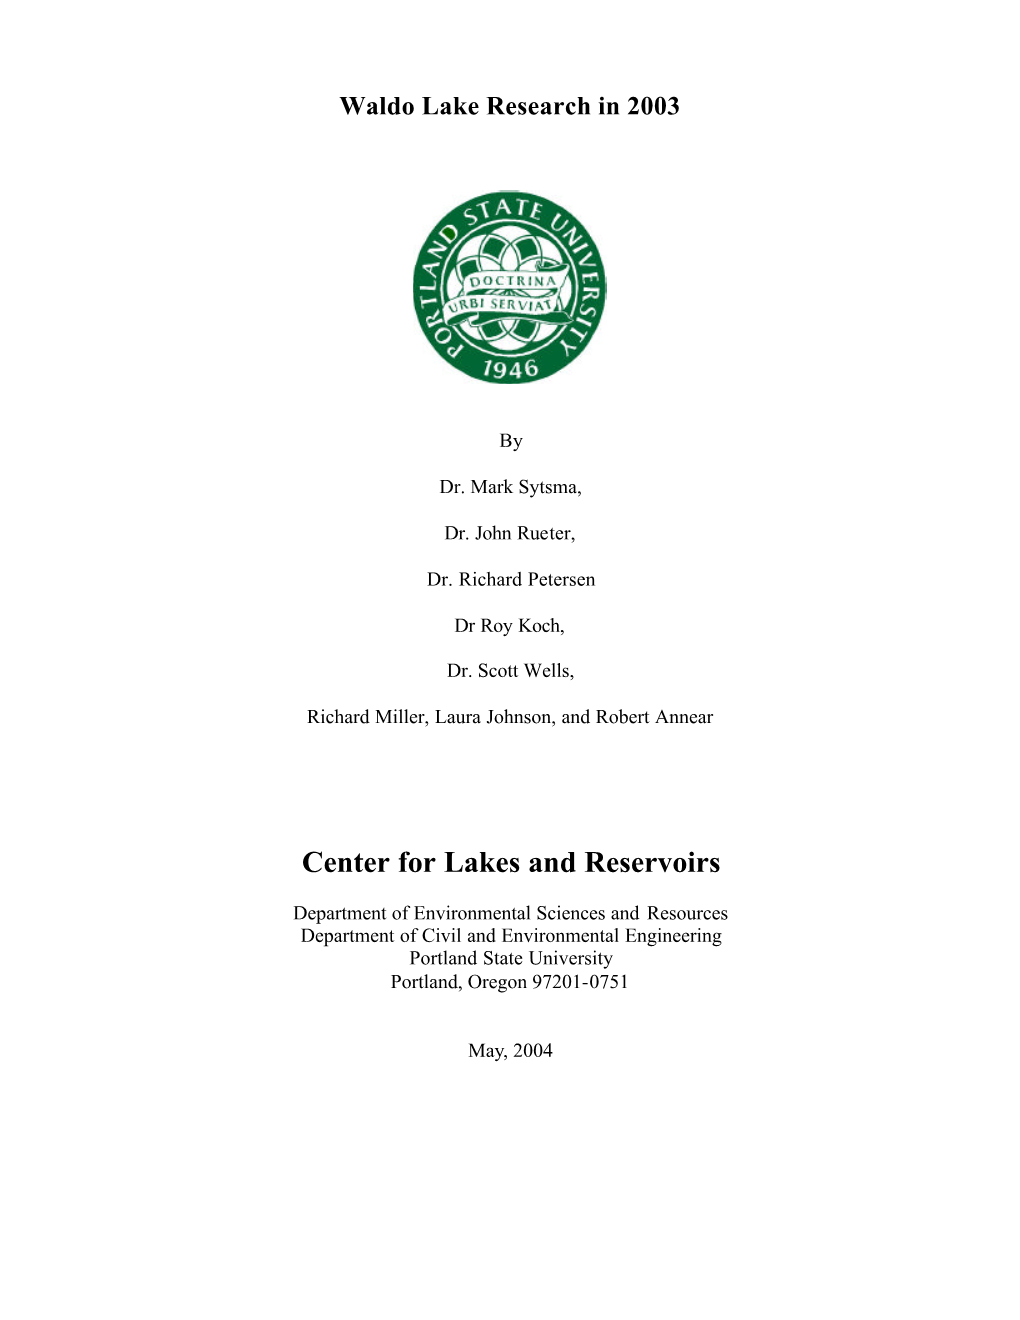 Waldo Lake Report15